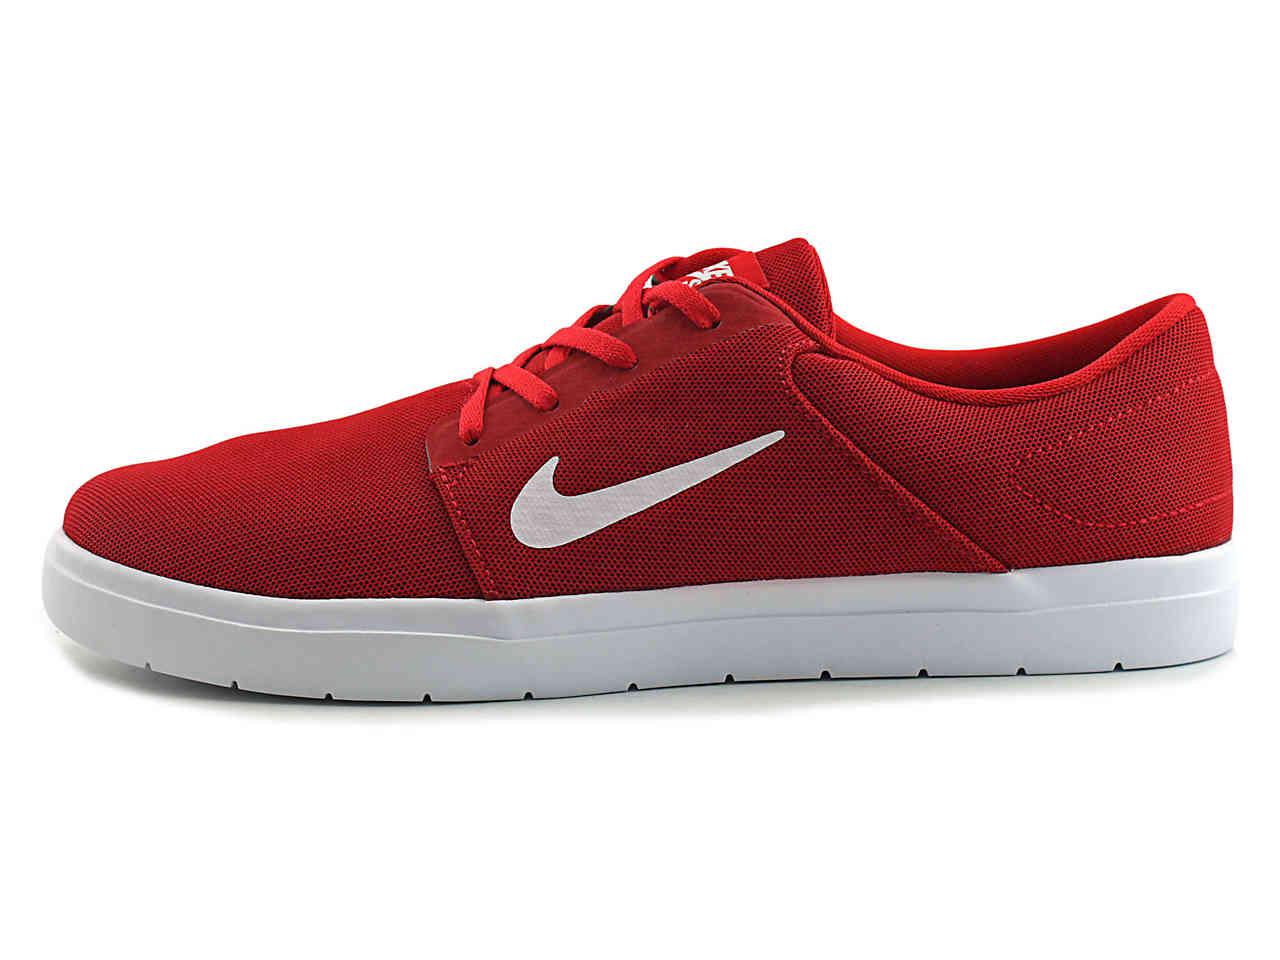 Nike Synthetic Sb Portmore Ultralight Sneaker in Red for Men - Lyst